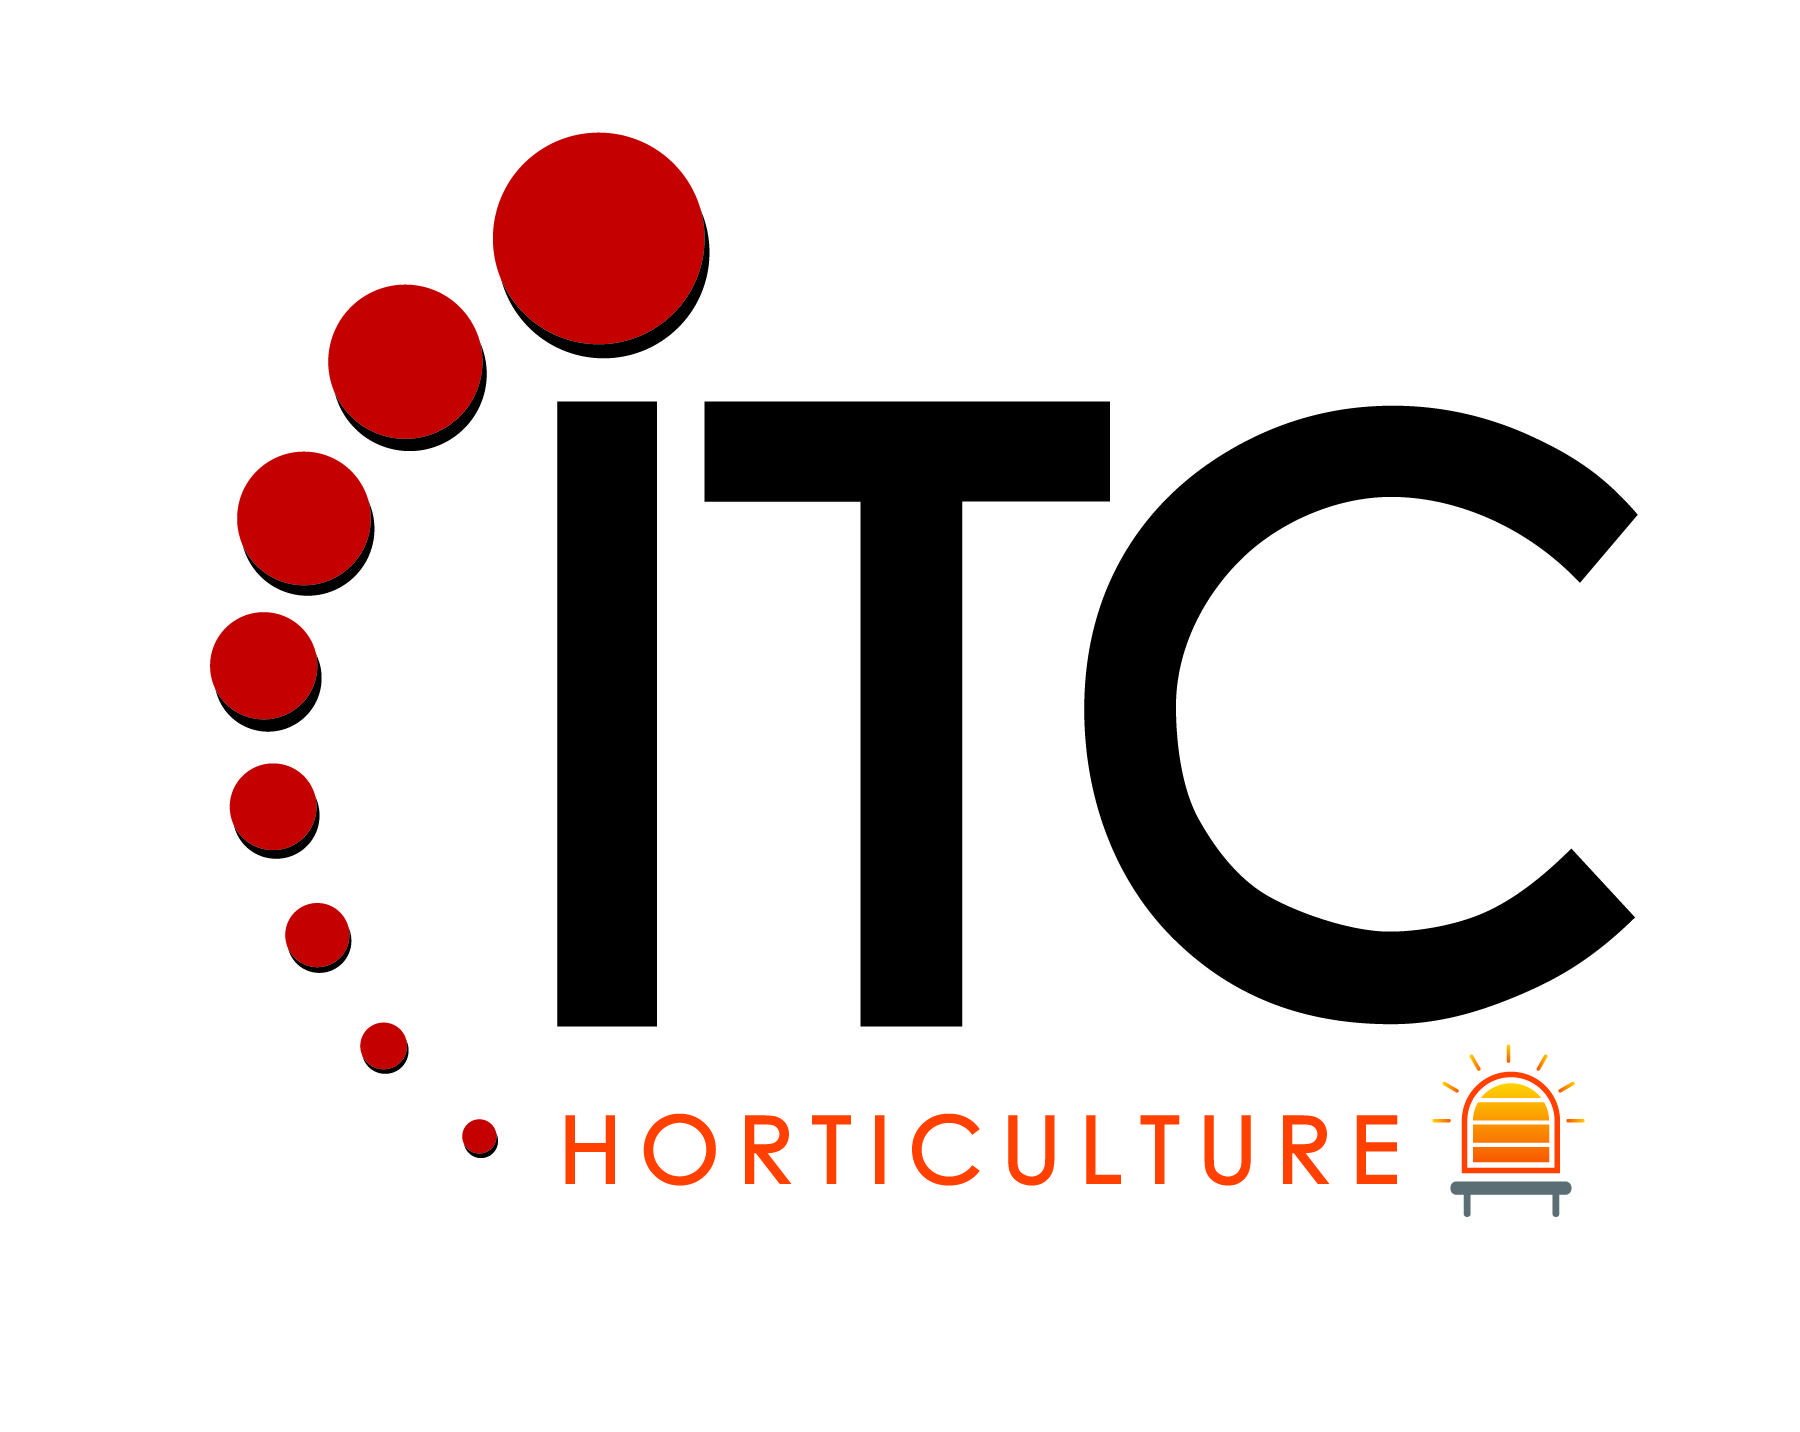 Horticulture Logo - HORTICULTURE LOGO 2018